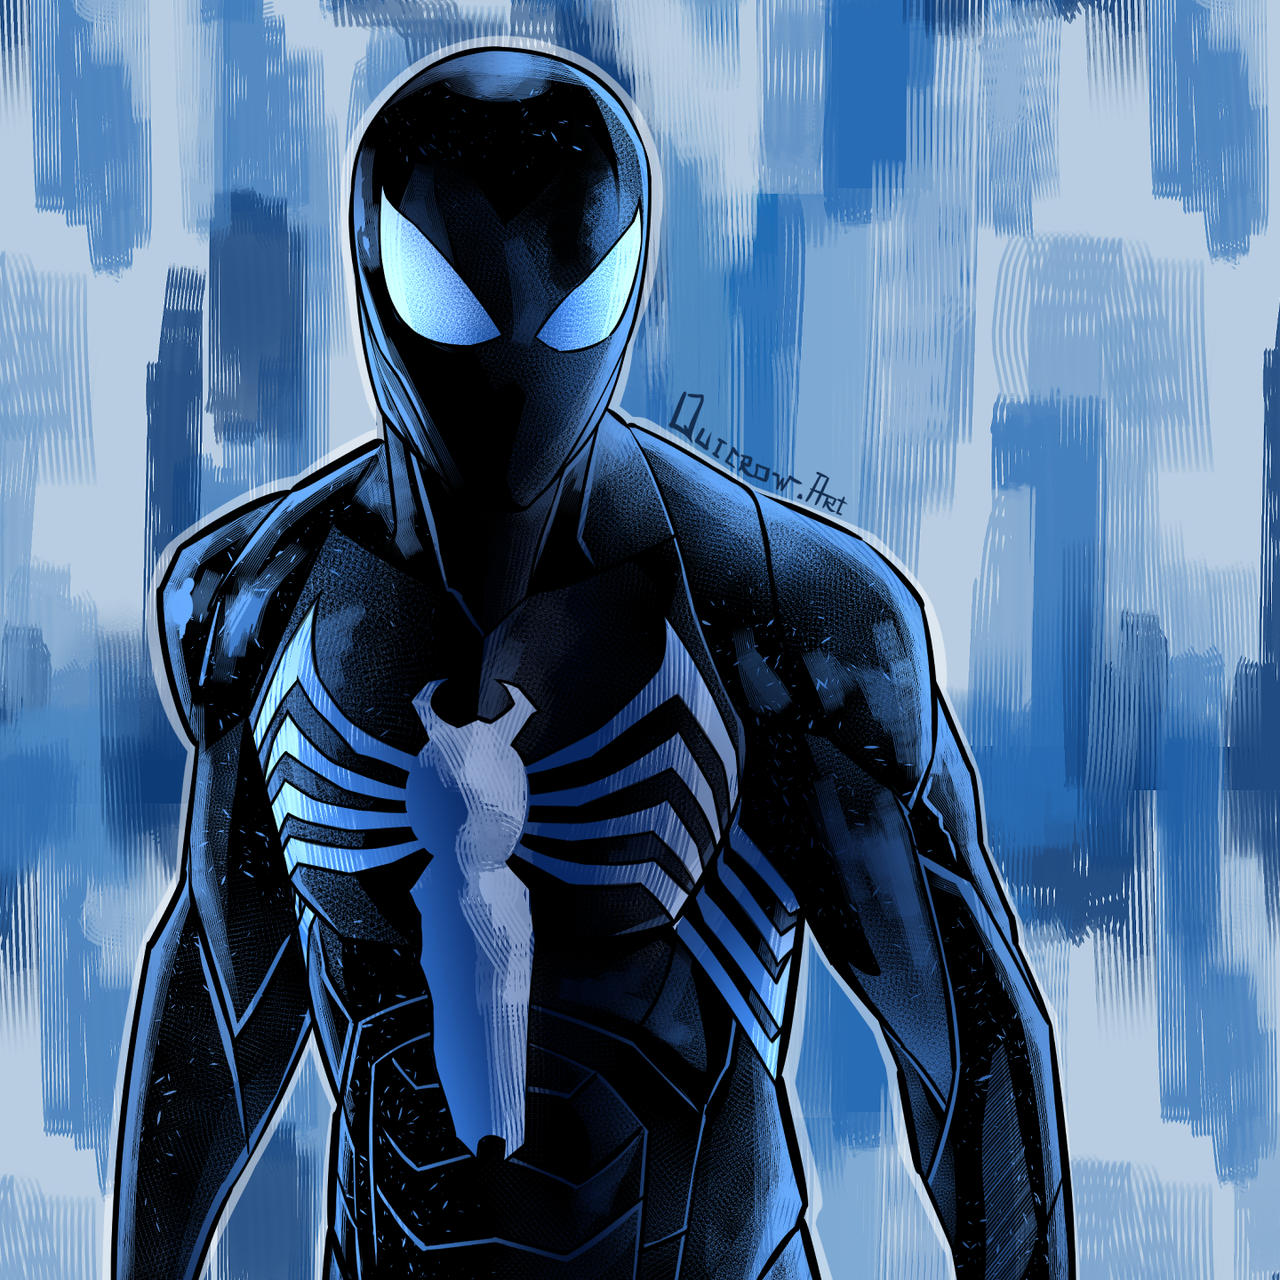 Peter - Symbiote ( Spiderman 2 PS5 )  Symbiote spiderman, Spider man 2,  Black spiderman